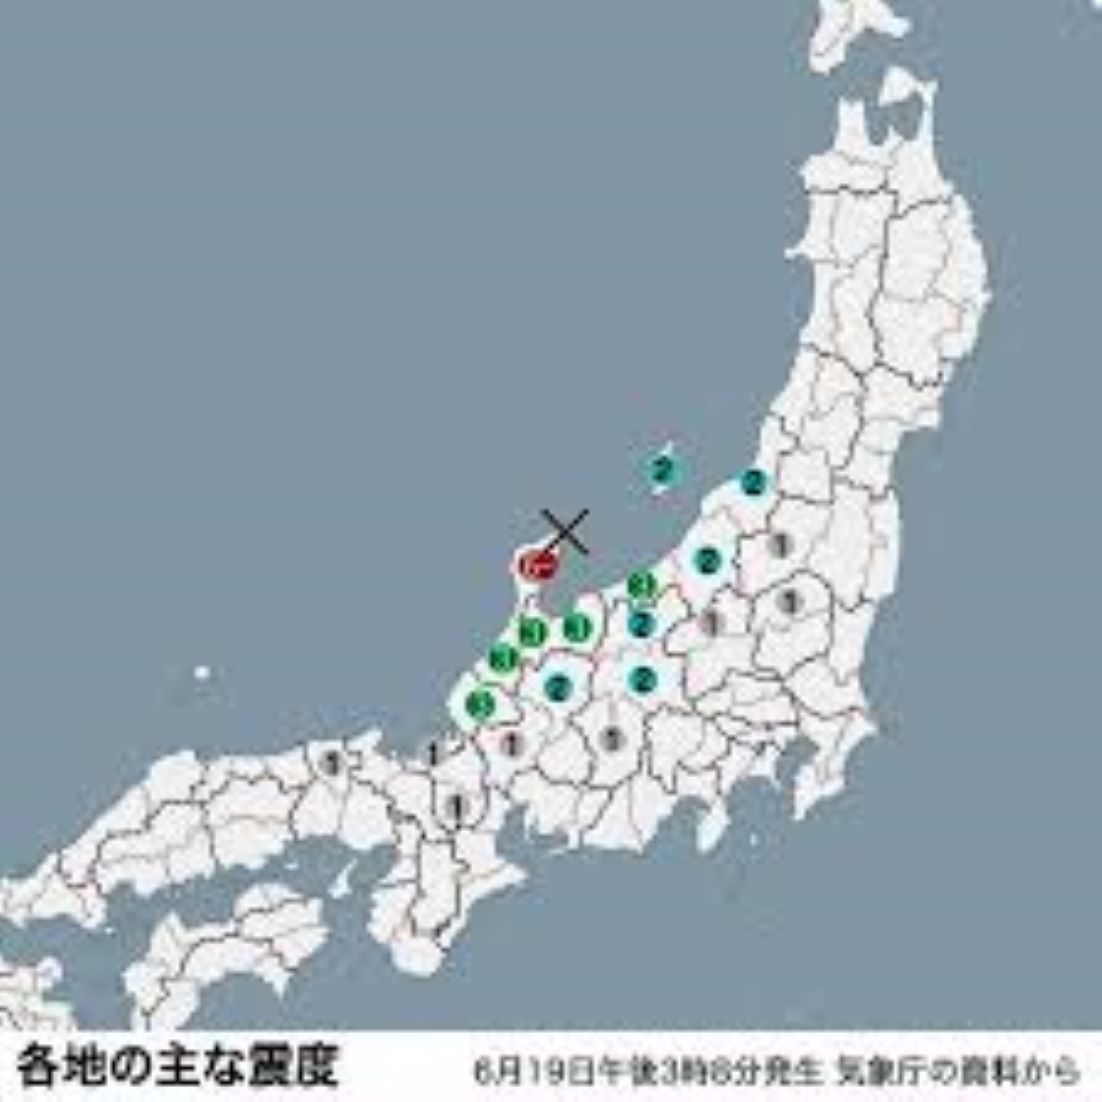 Urgent: 5.9-Magnitude Quake Rocked Japan’s Noto Region